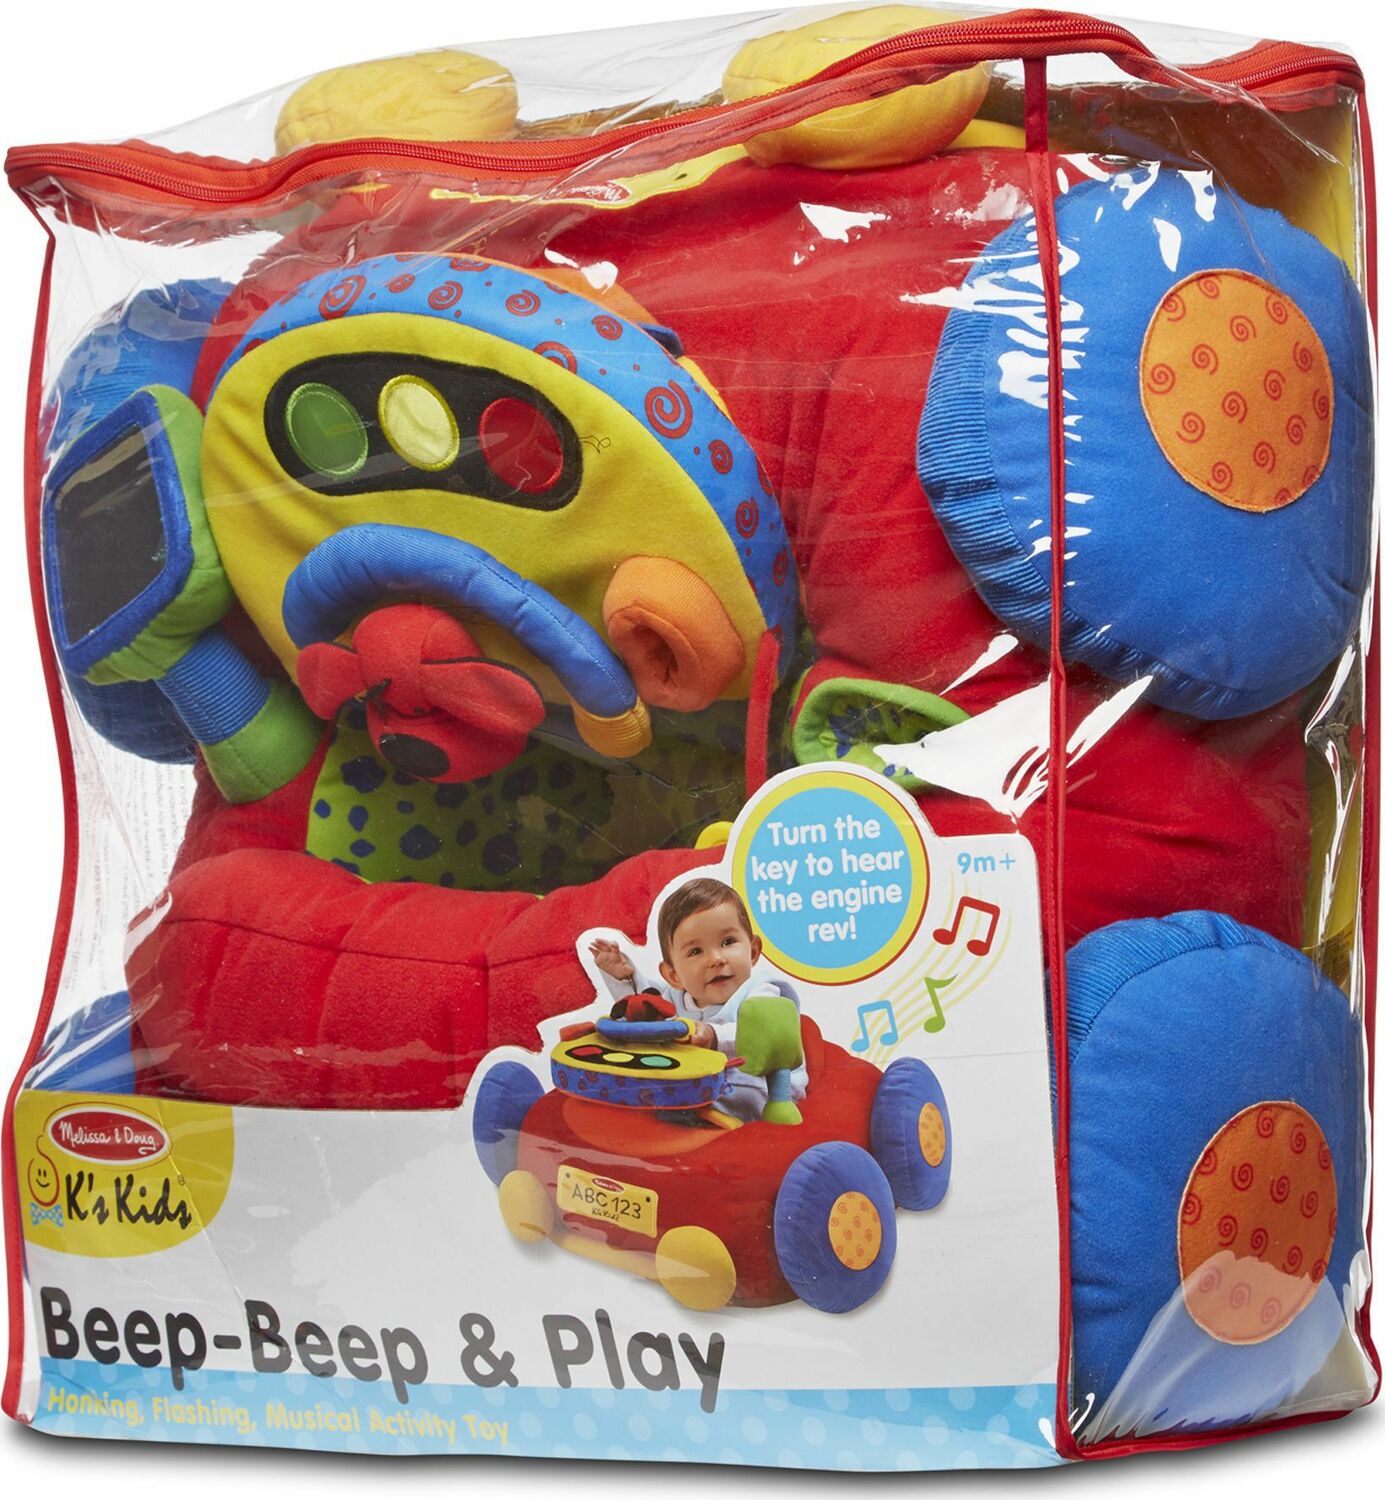 Beep-Beep & Play Activity Toy